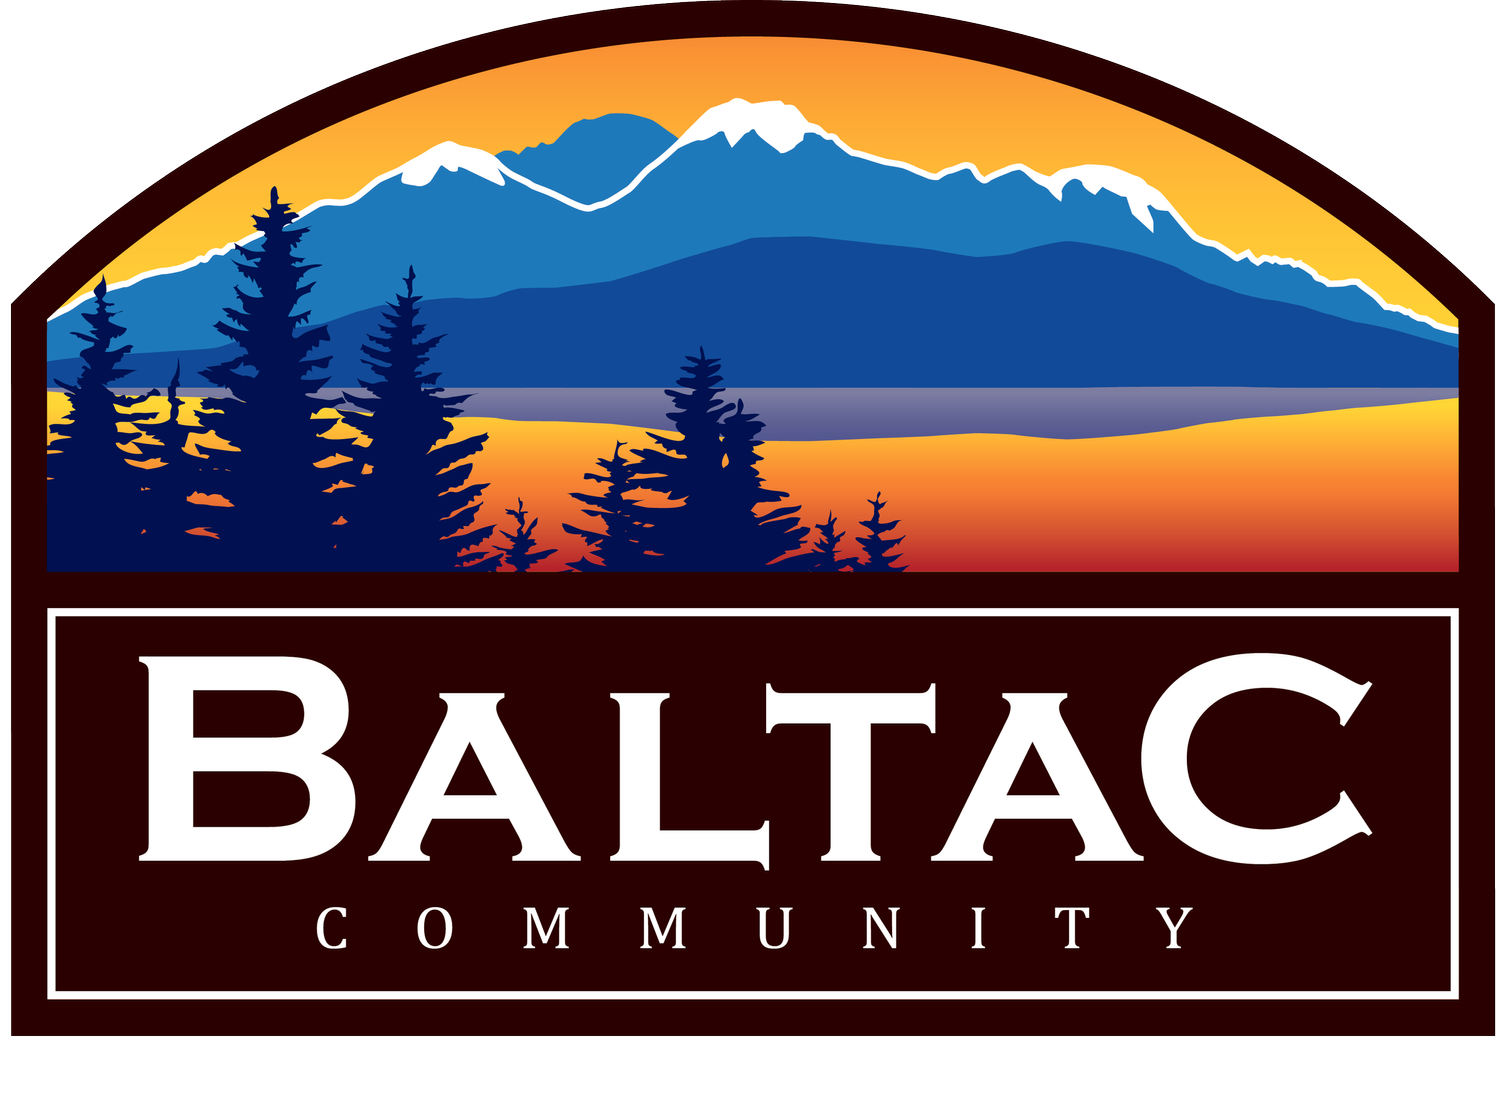 Baltac Community